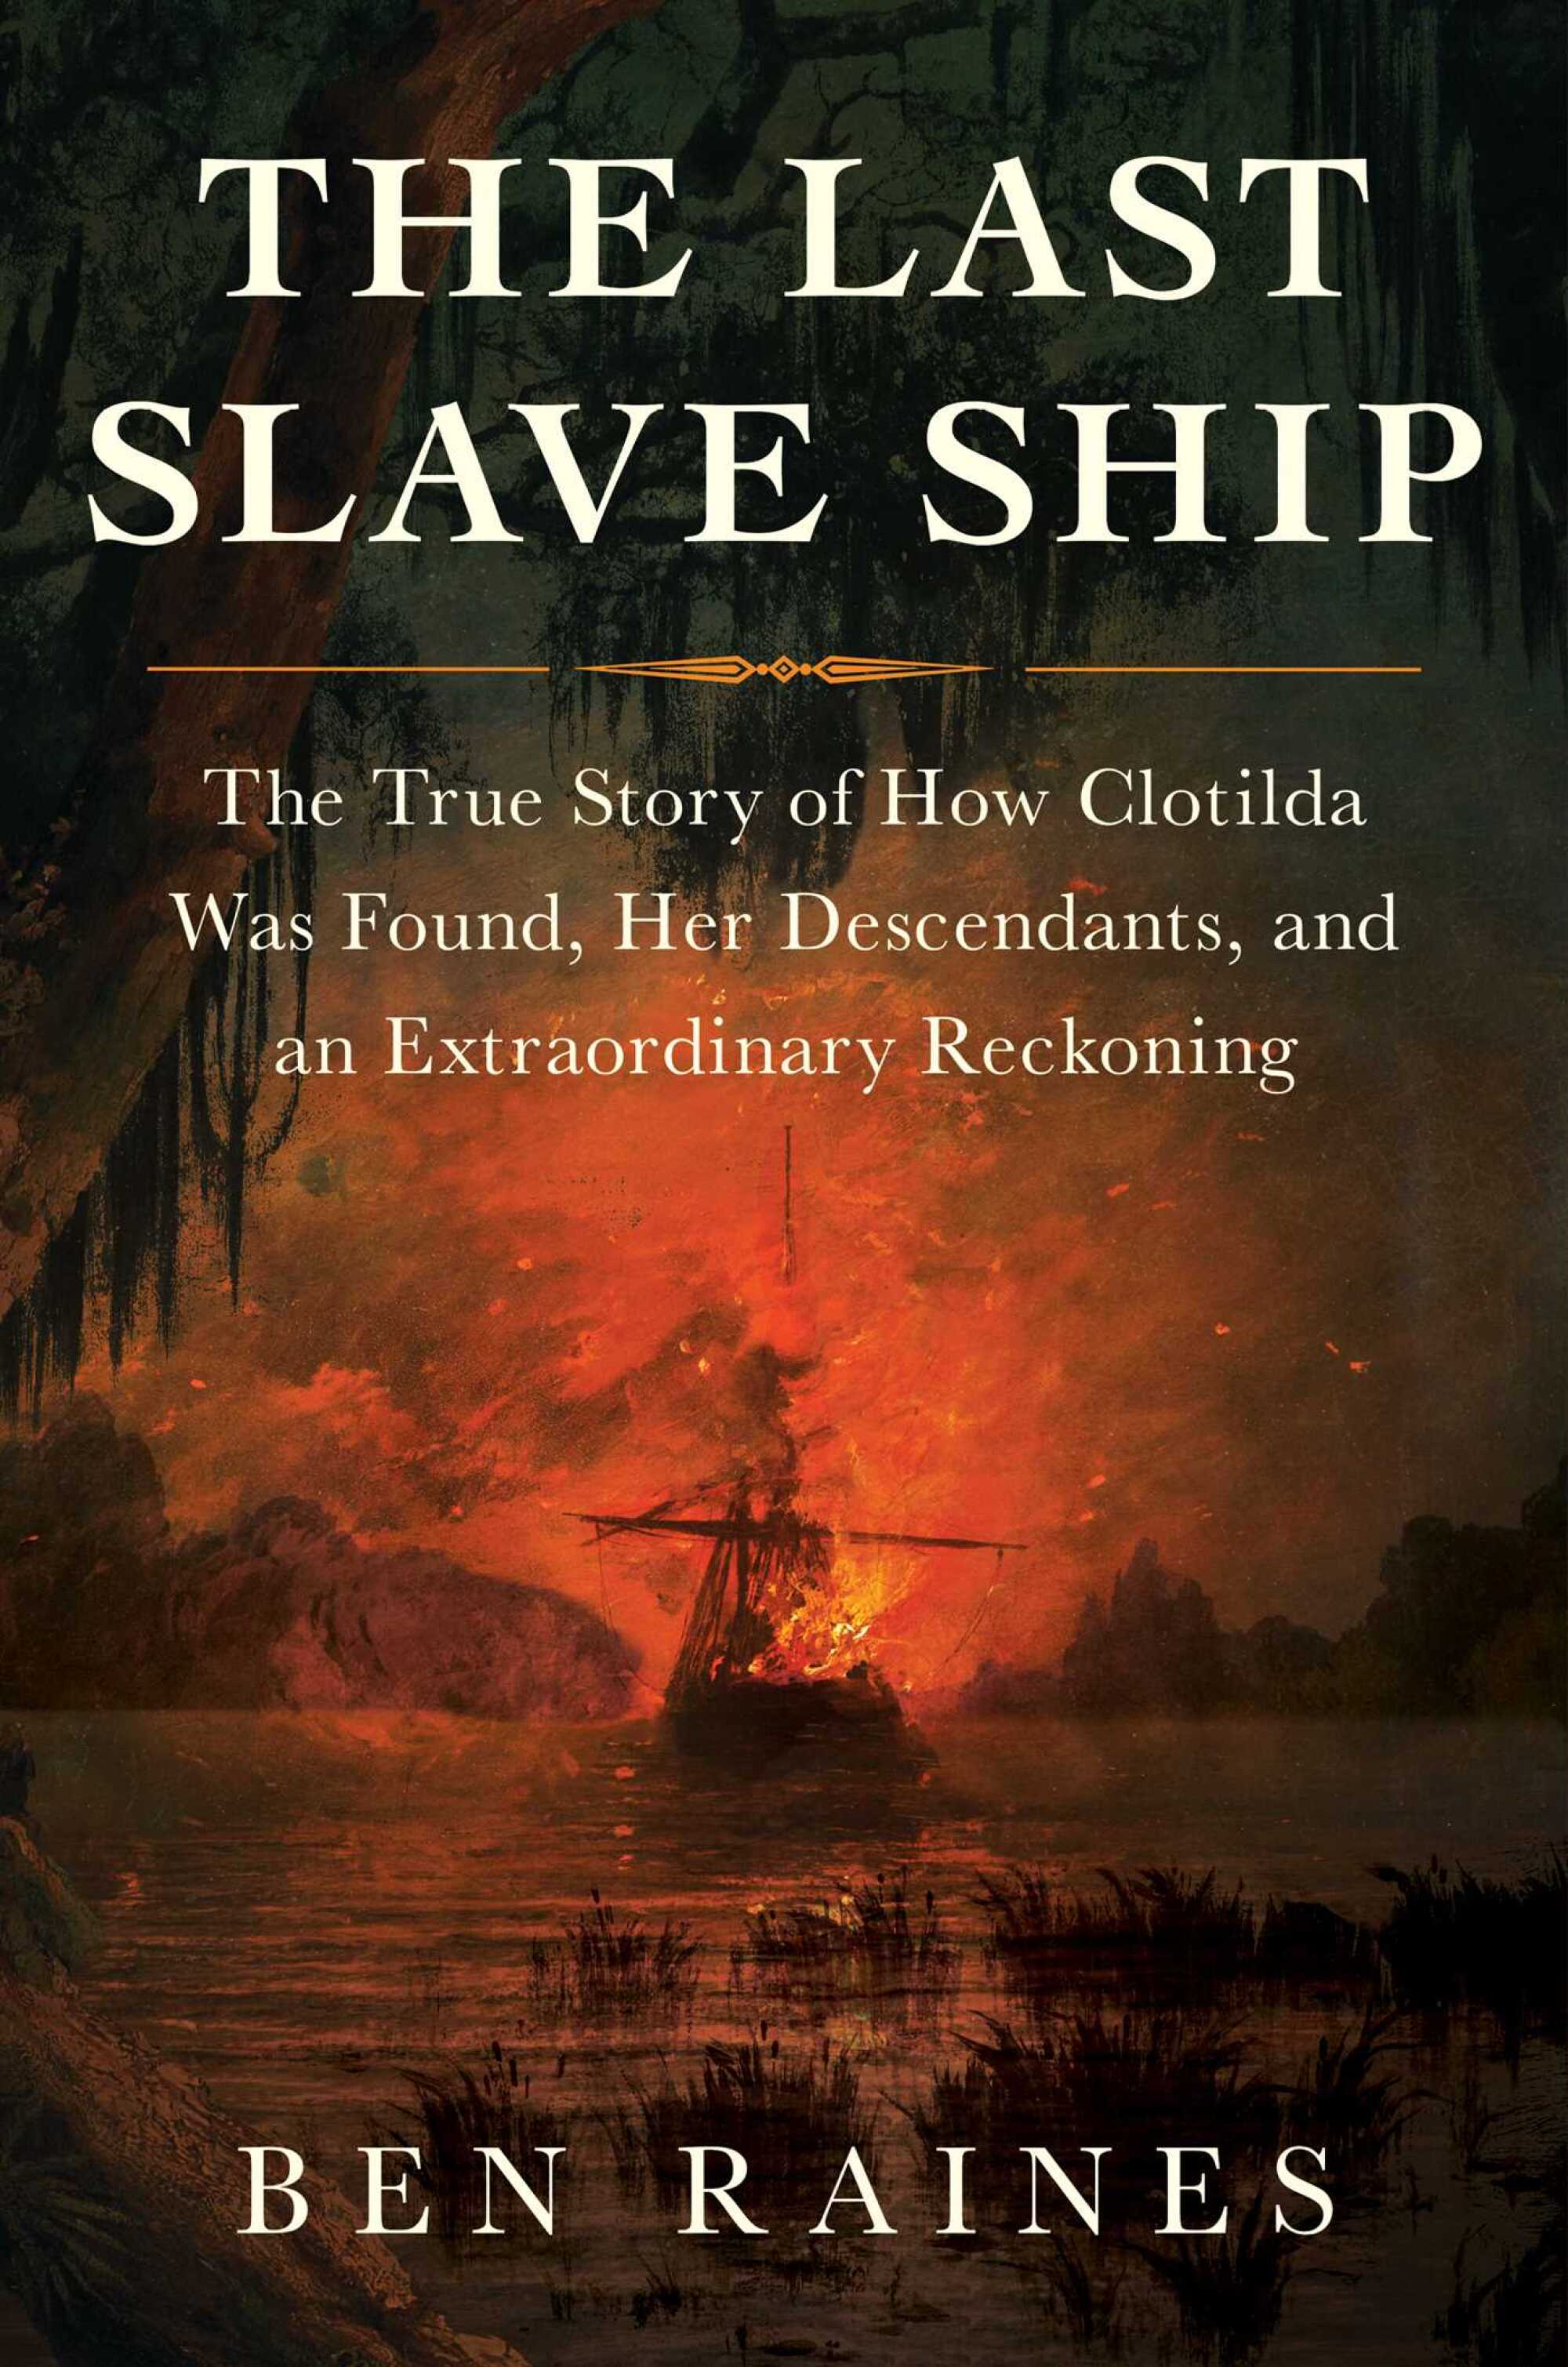 "The Last Slave Ship," by Ben Raines